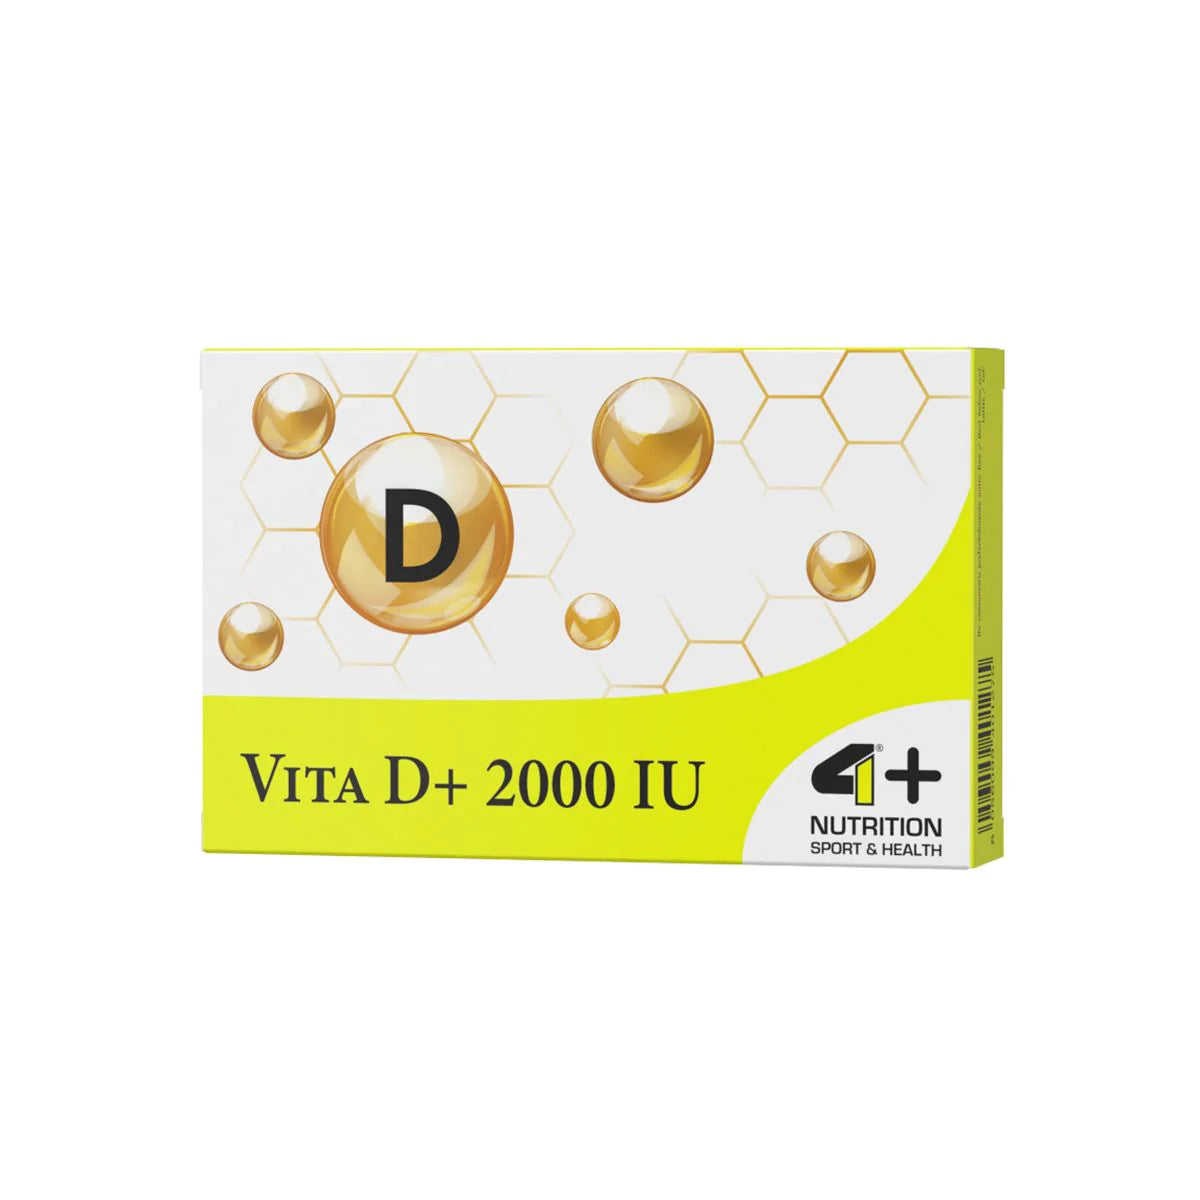 VITA D+ 2000 IU - 4+ Nutrition